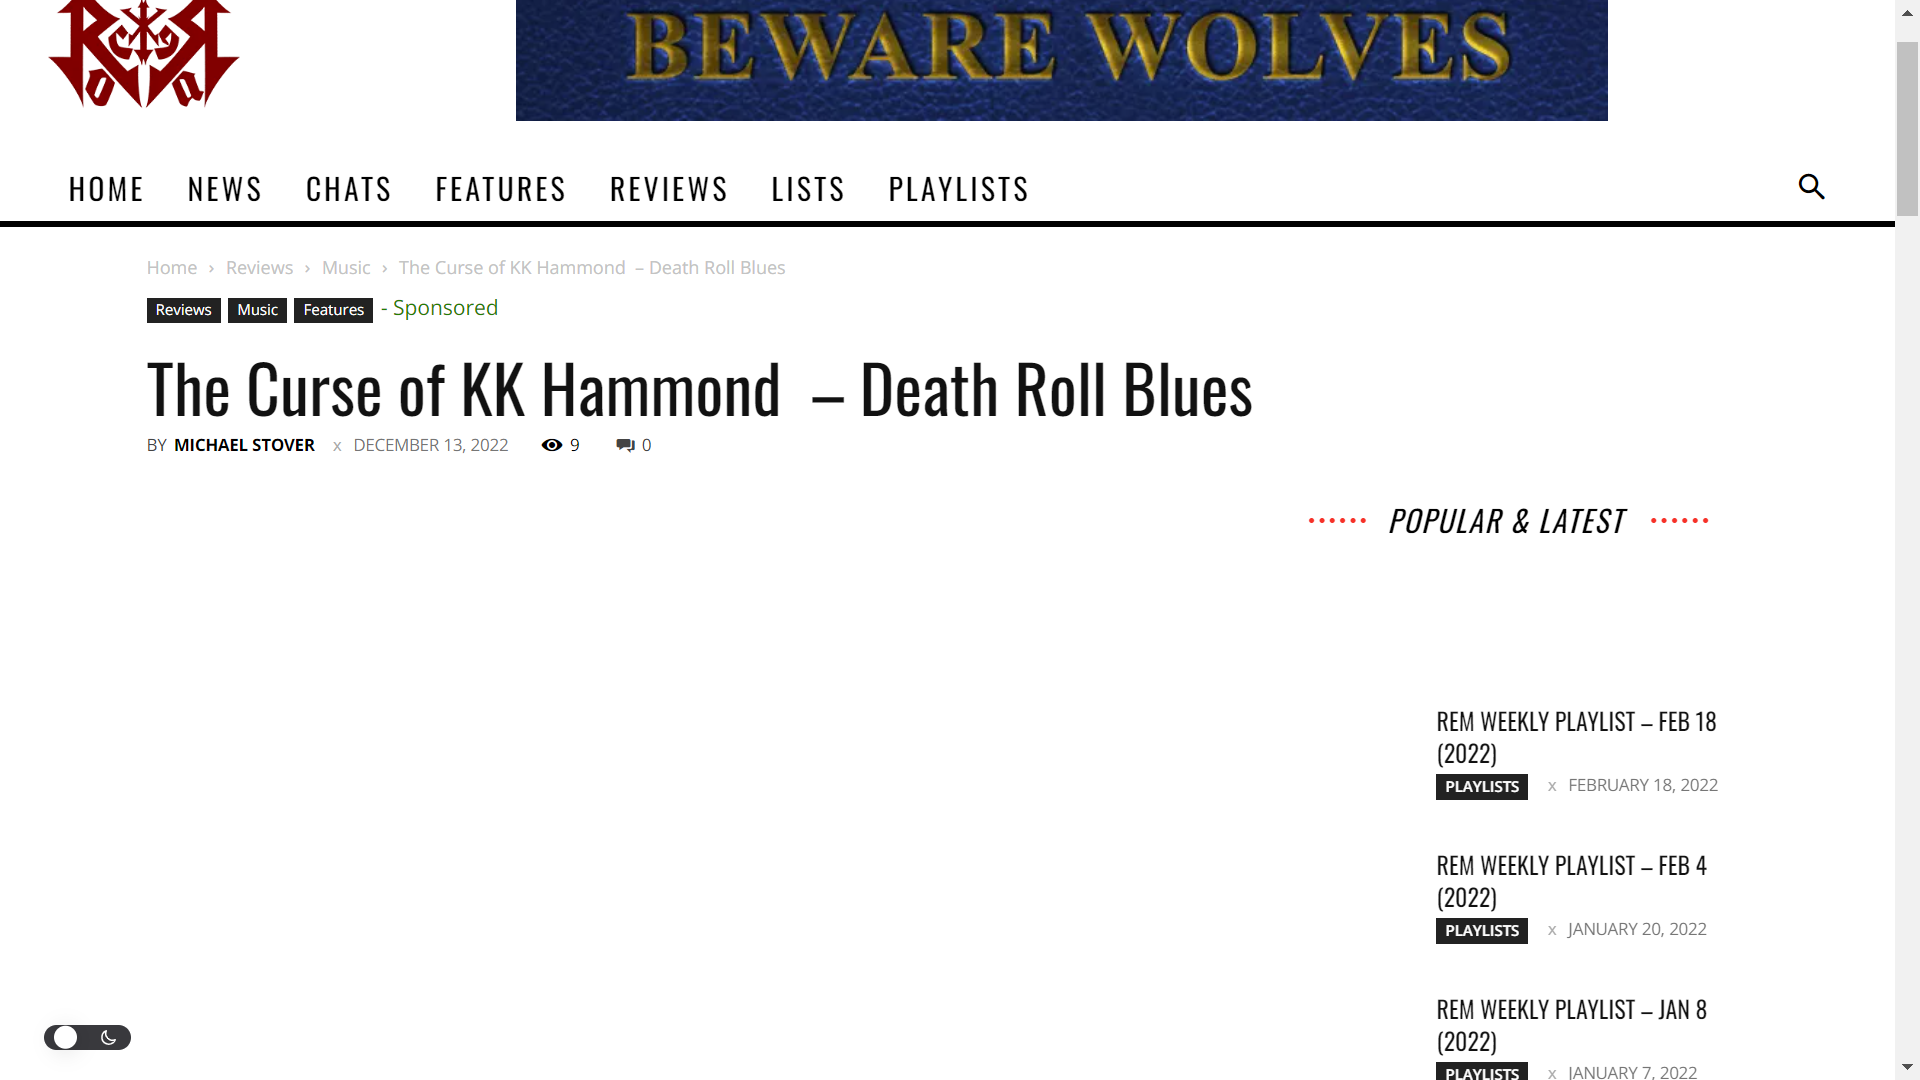 Rock Era Magazine Reviews The Curse of KK Hammond's “Death Roll